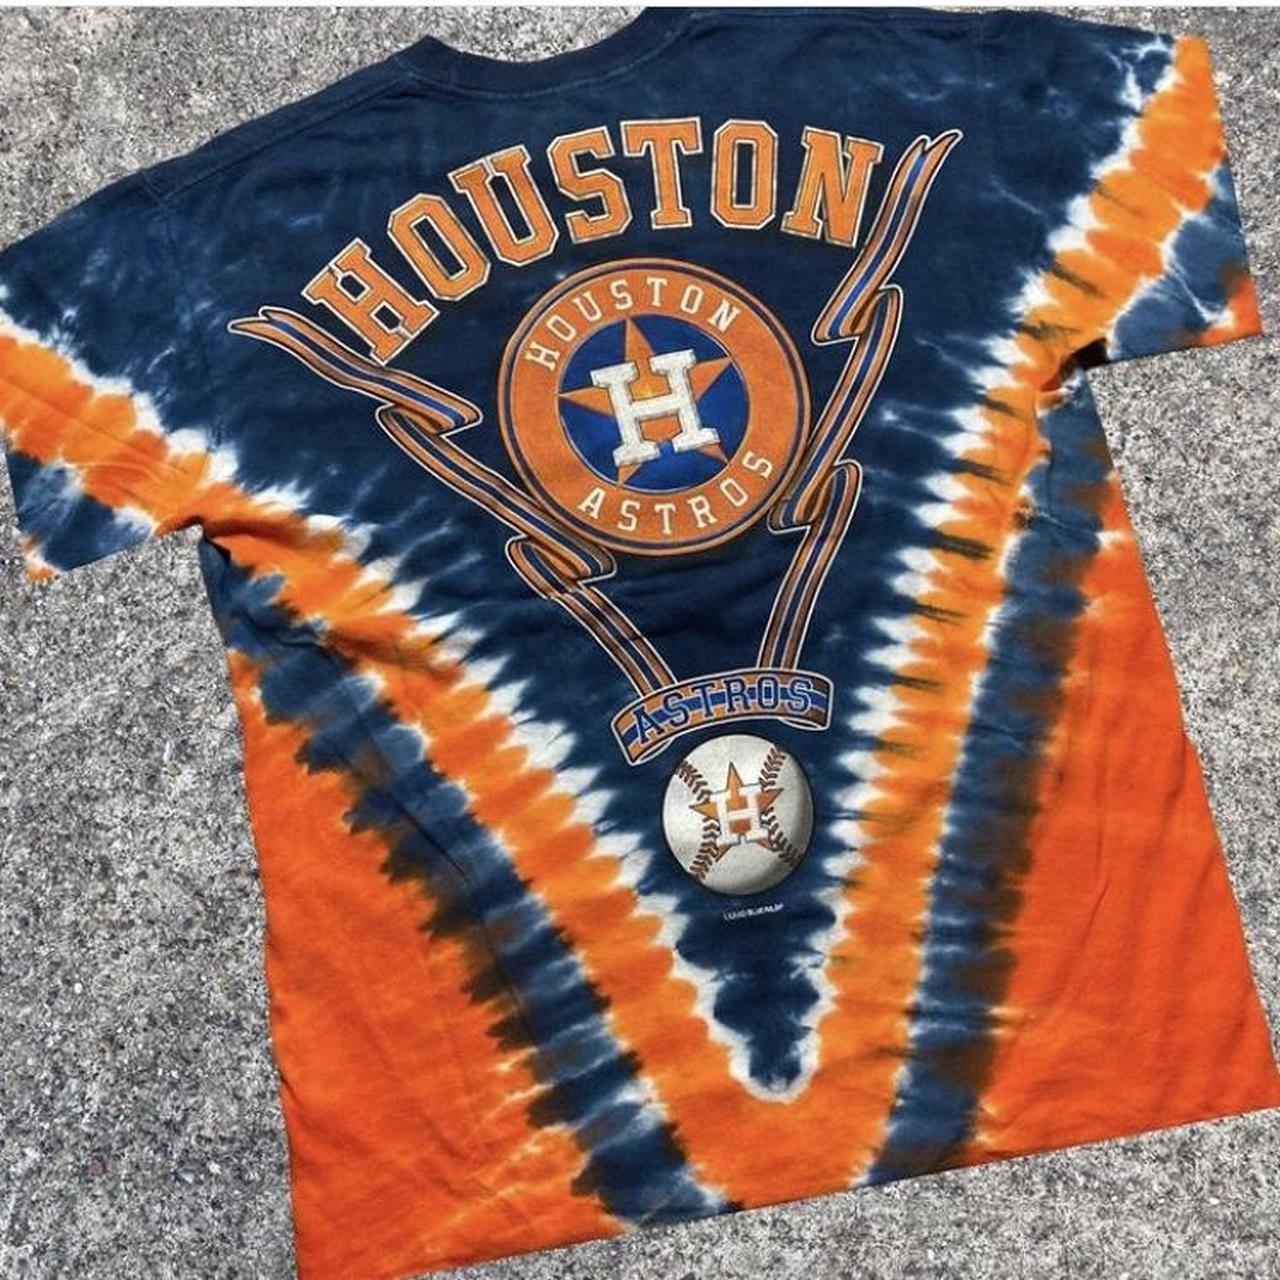 Houston Astros MLB Mens To Tie-Dye For T-Shirt